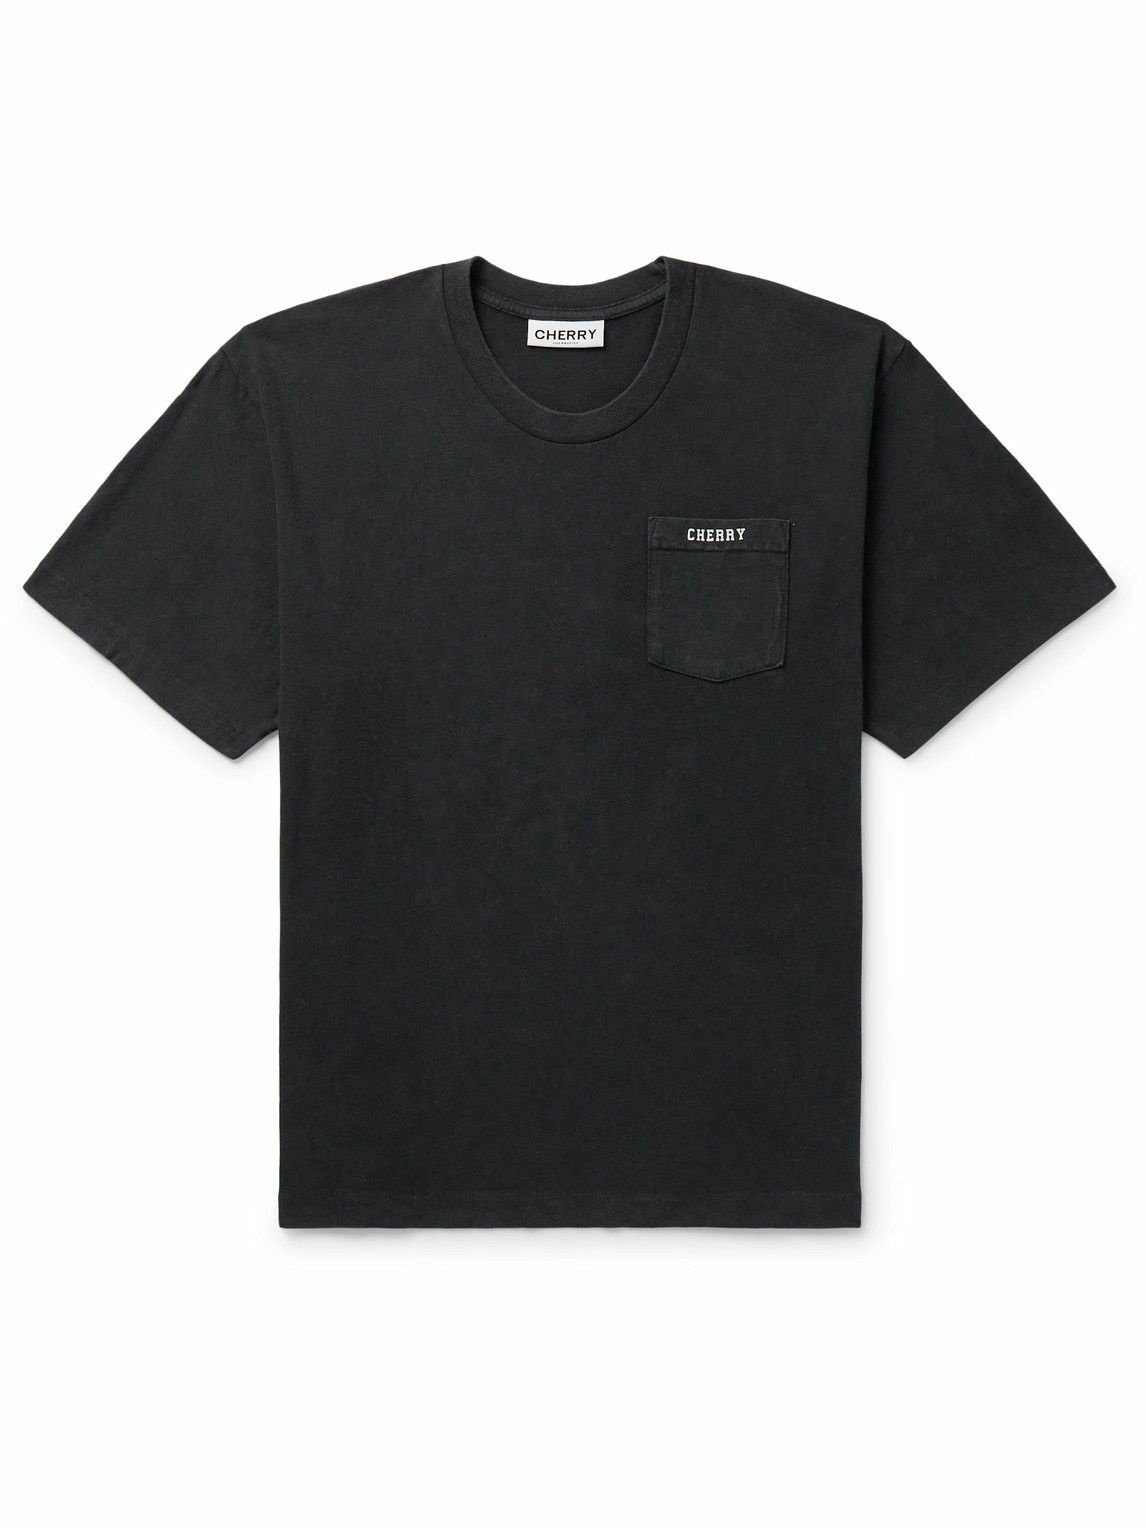 Prada V Neck Nylon Pocket T-Shirt white,black& Blue. 100